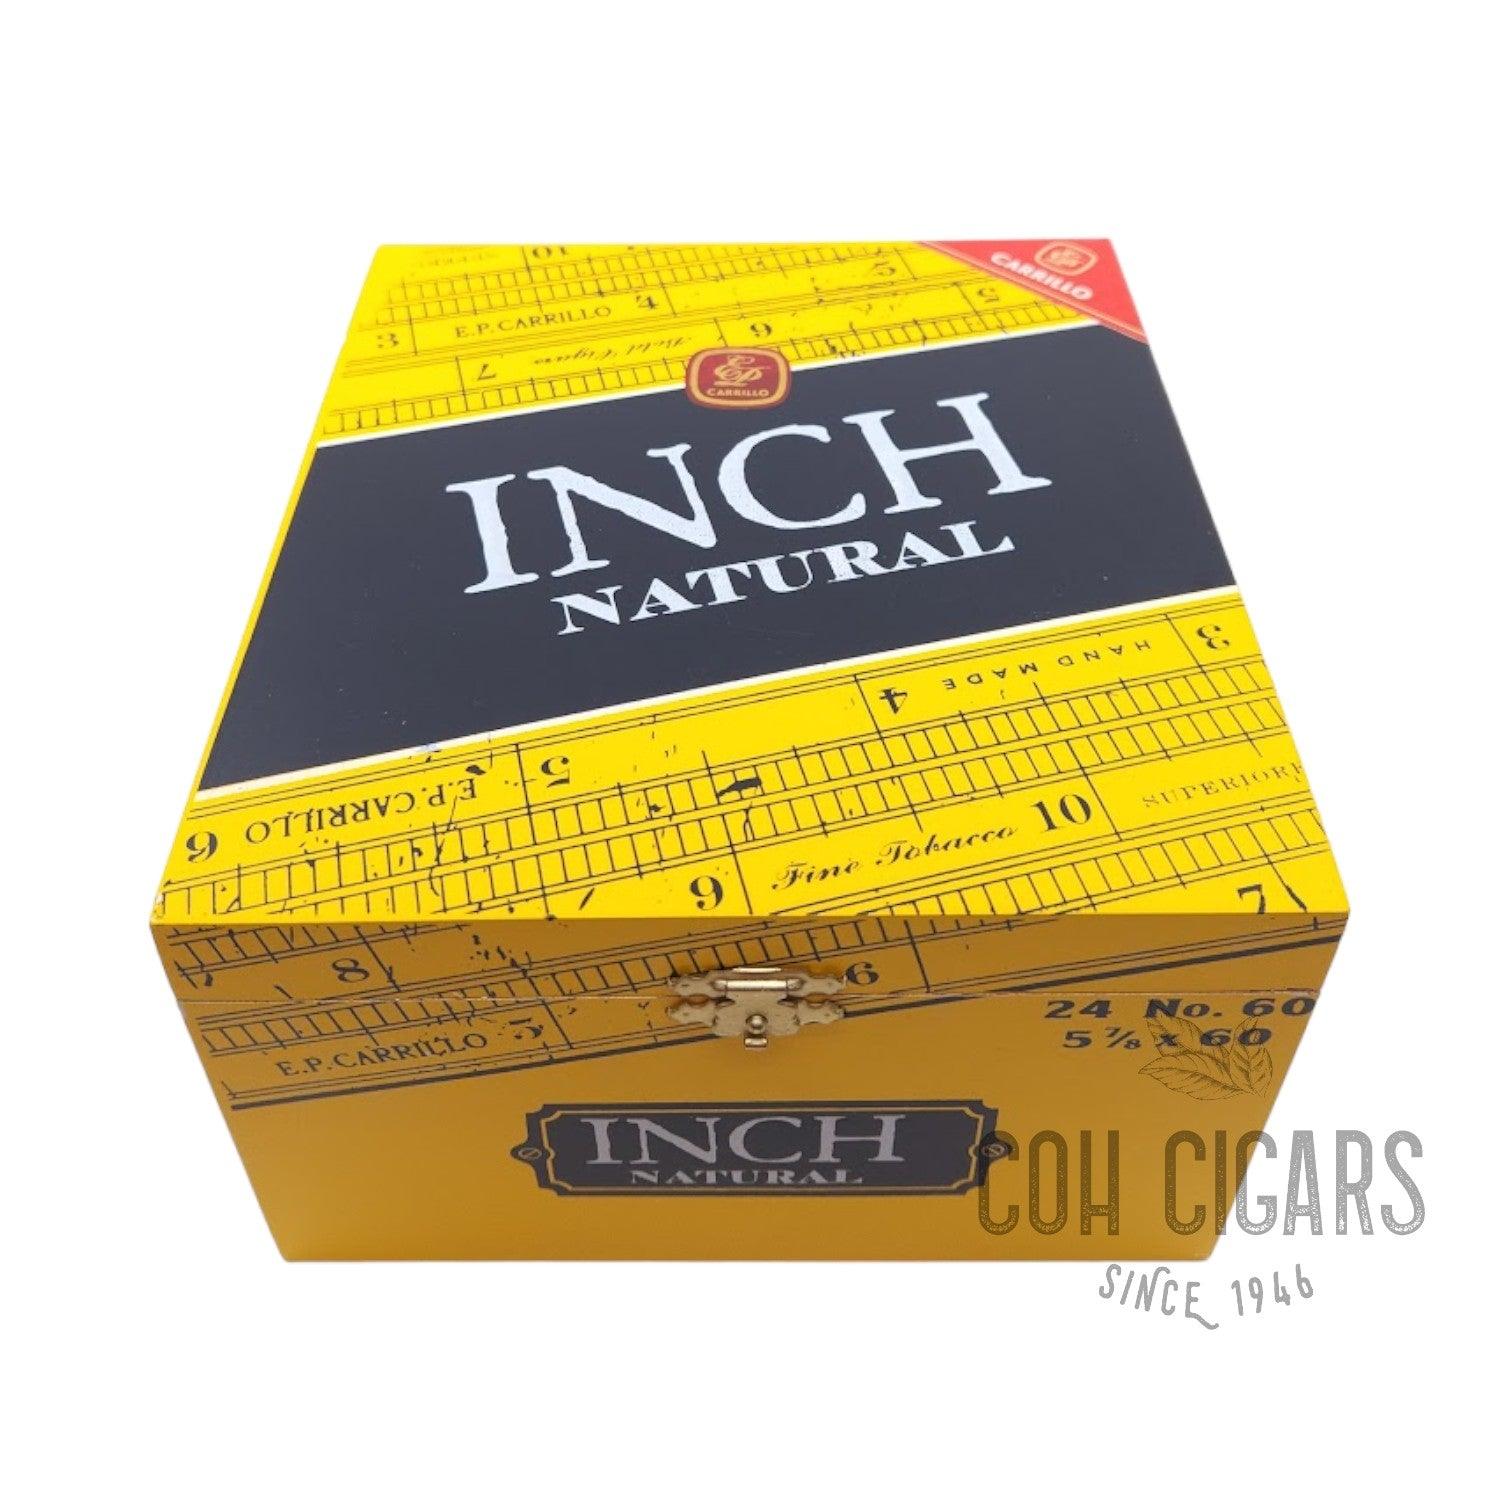 E.P. Carrillo Cigar | INCH Natural No. 60 | Box 24 - hk.cohcigars